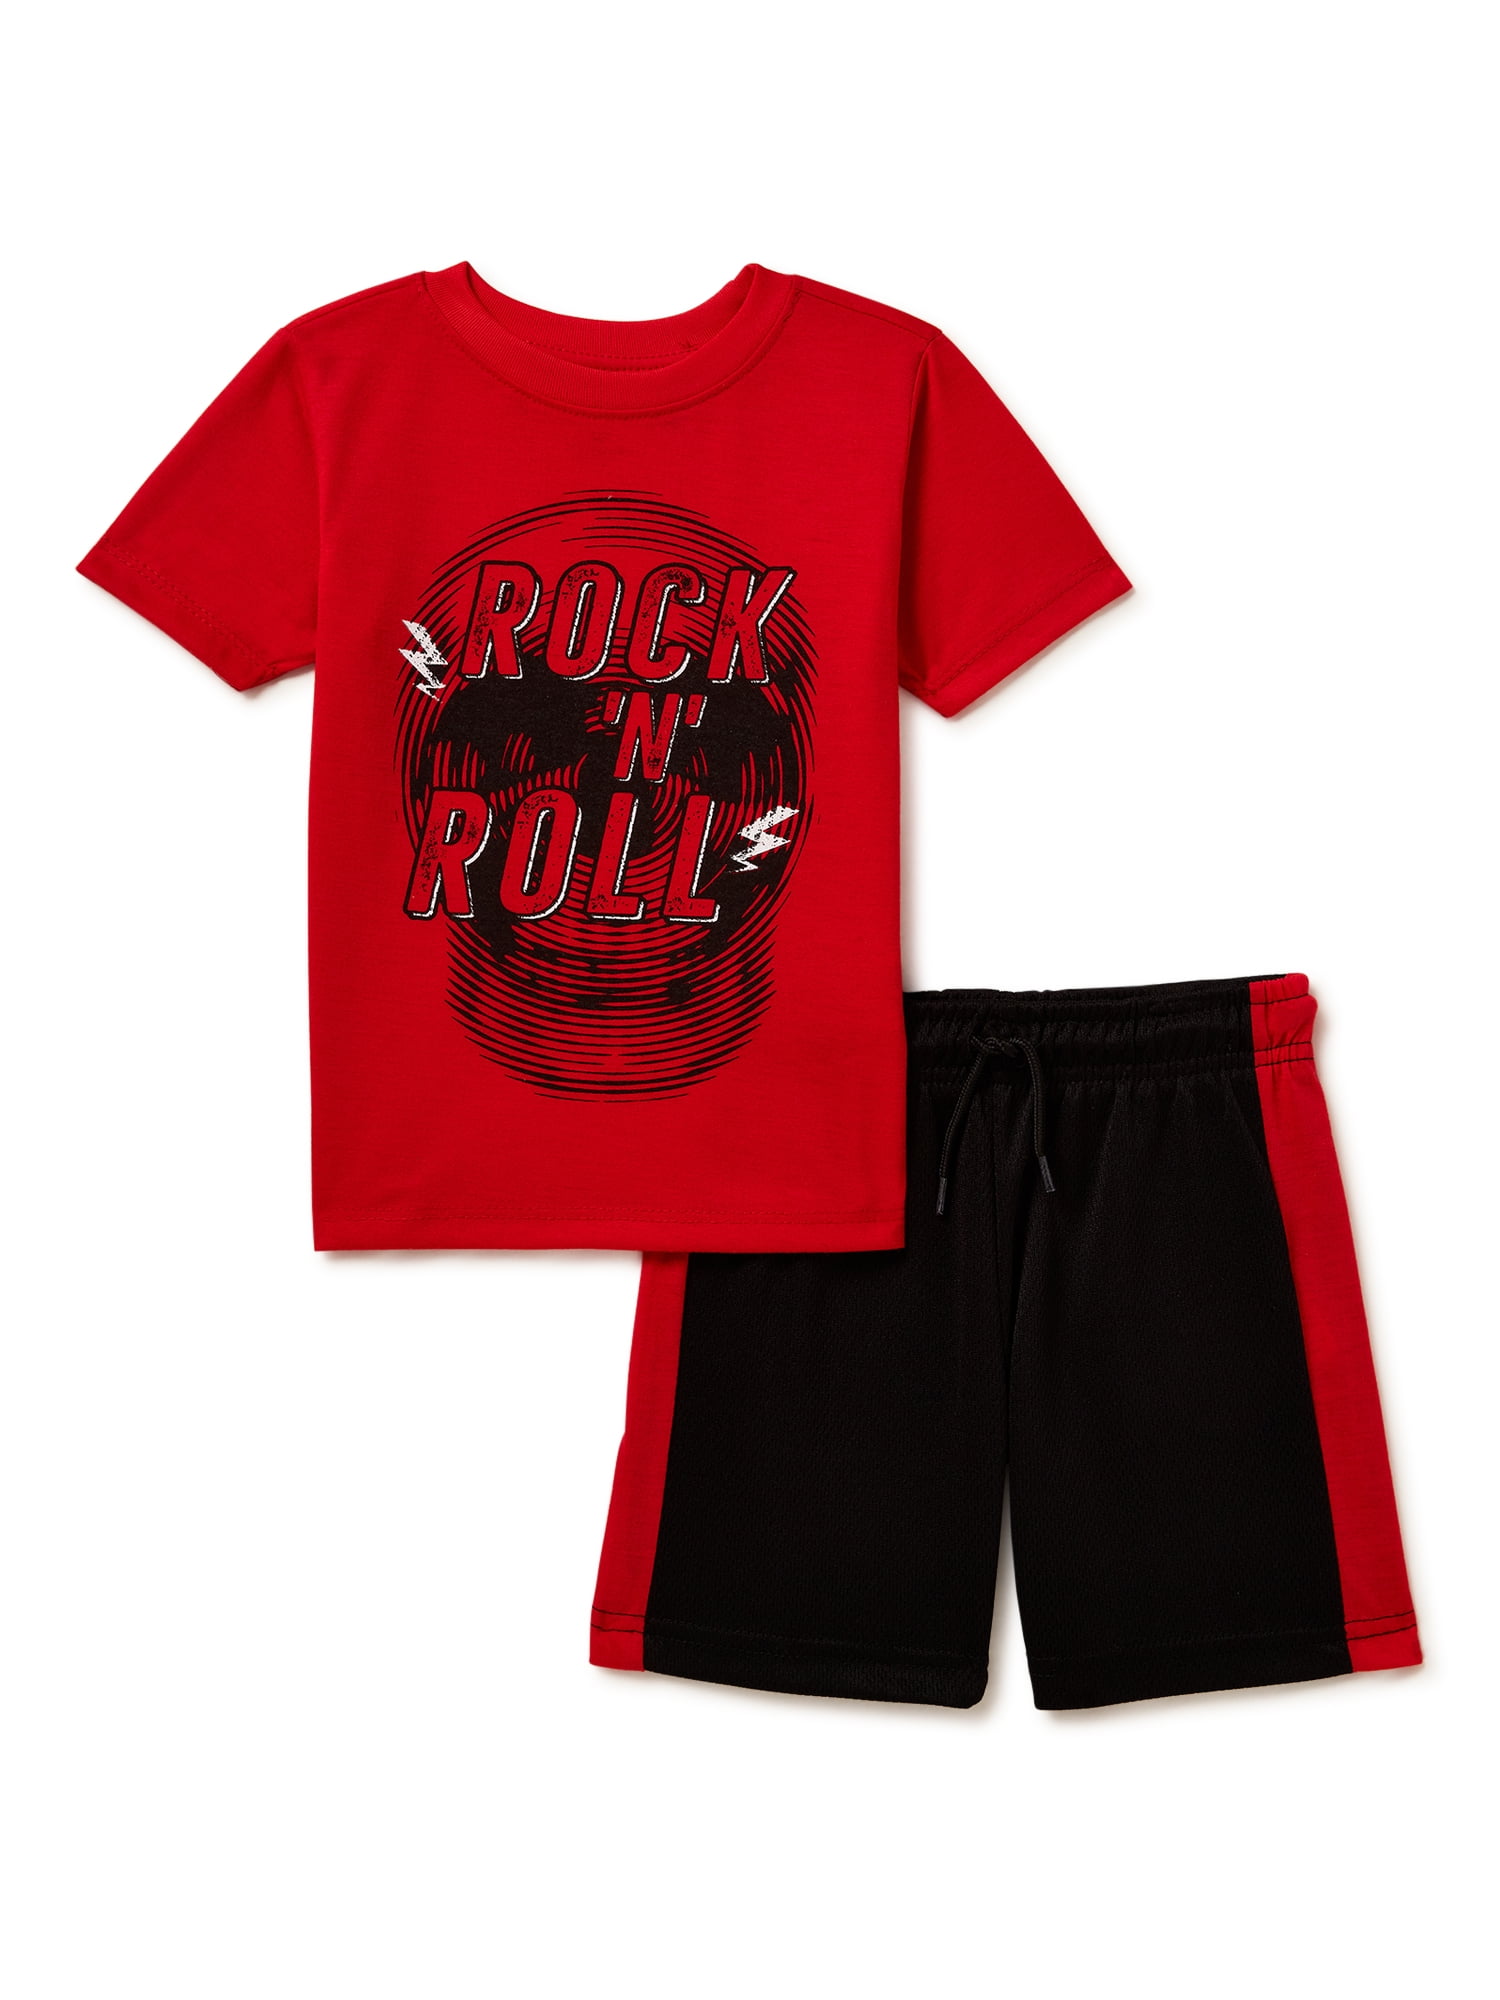 Tony Hawk Toddler Boy 2PC Outfit Set, Sizes 2T-4T - Walmart.com